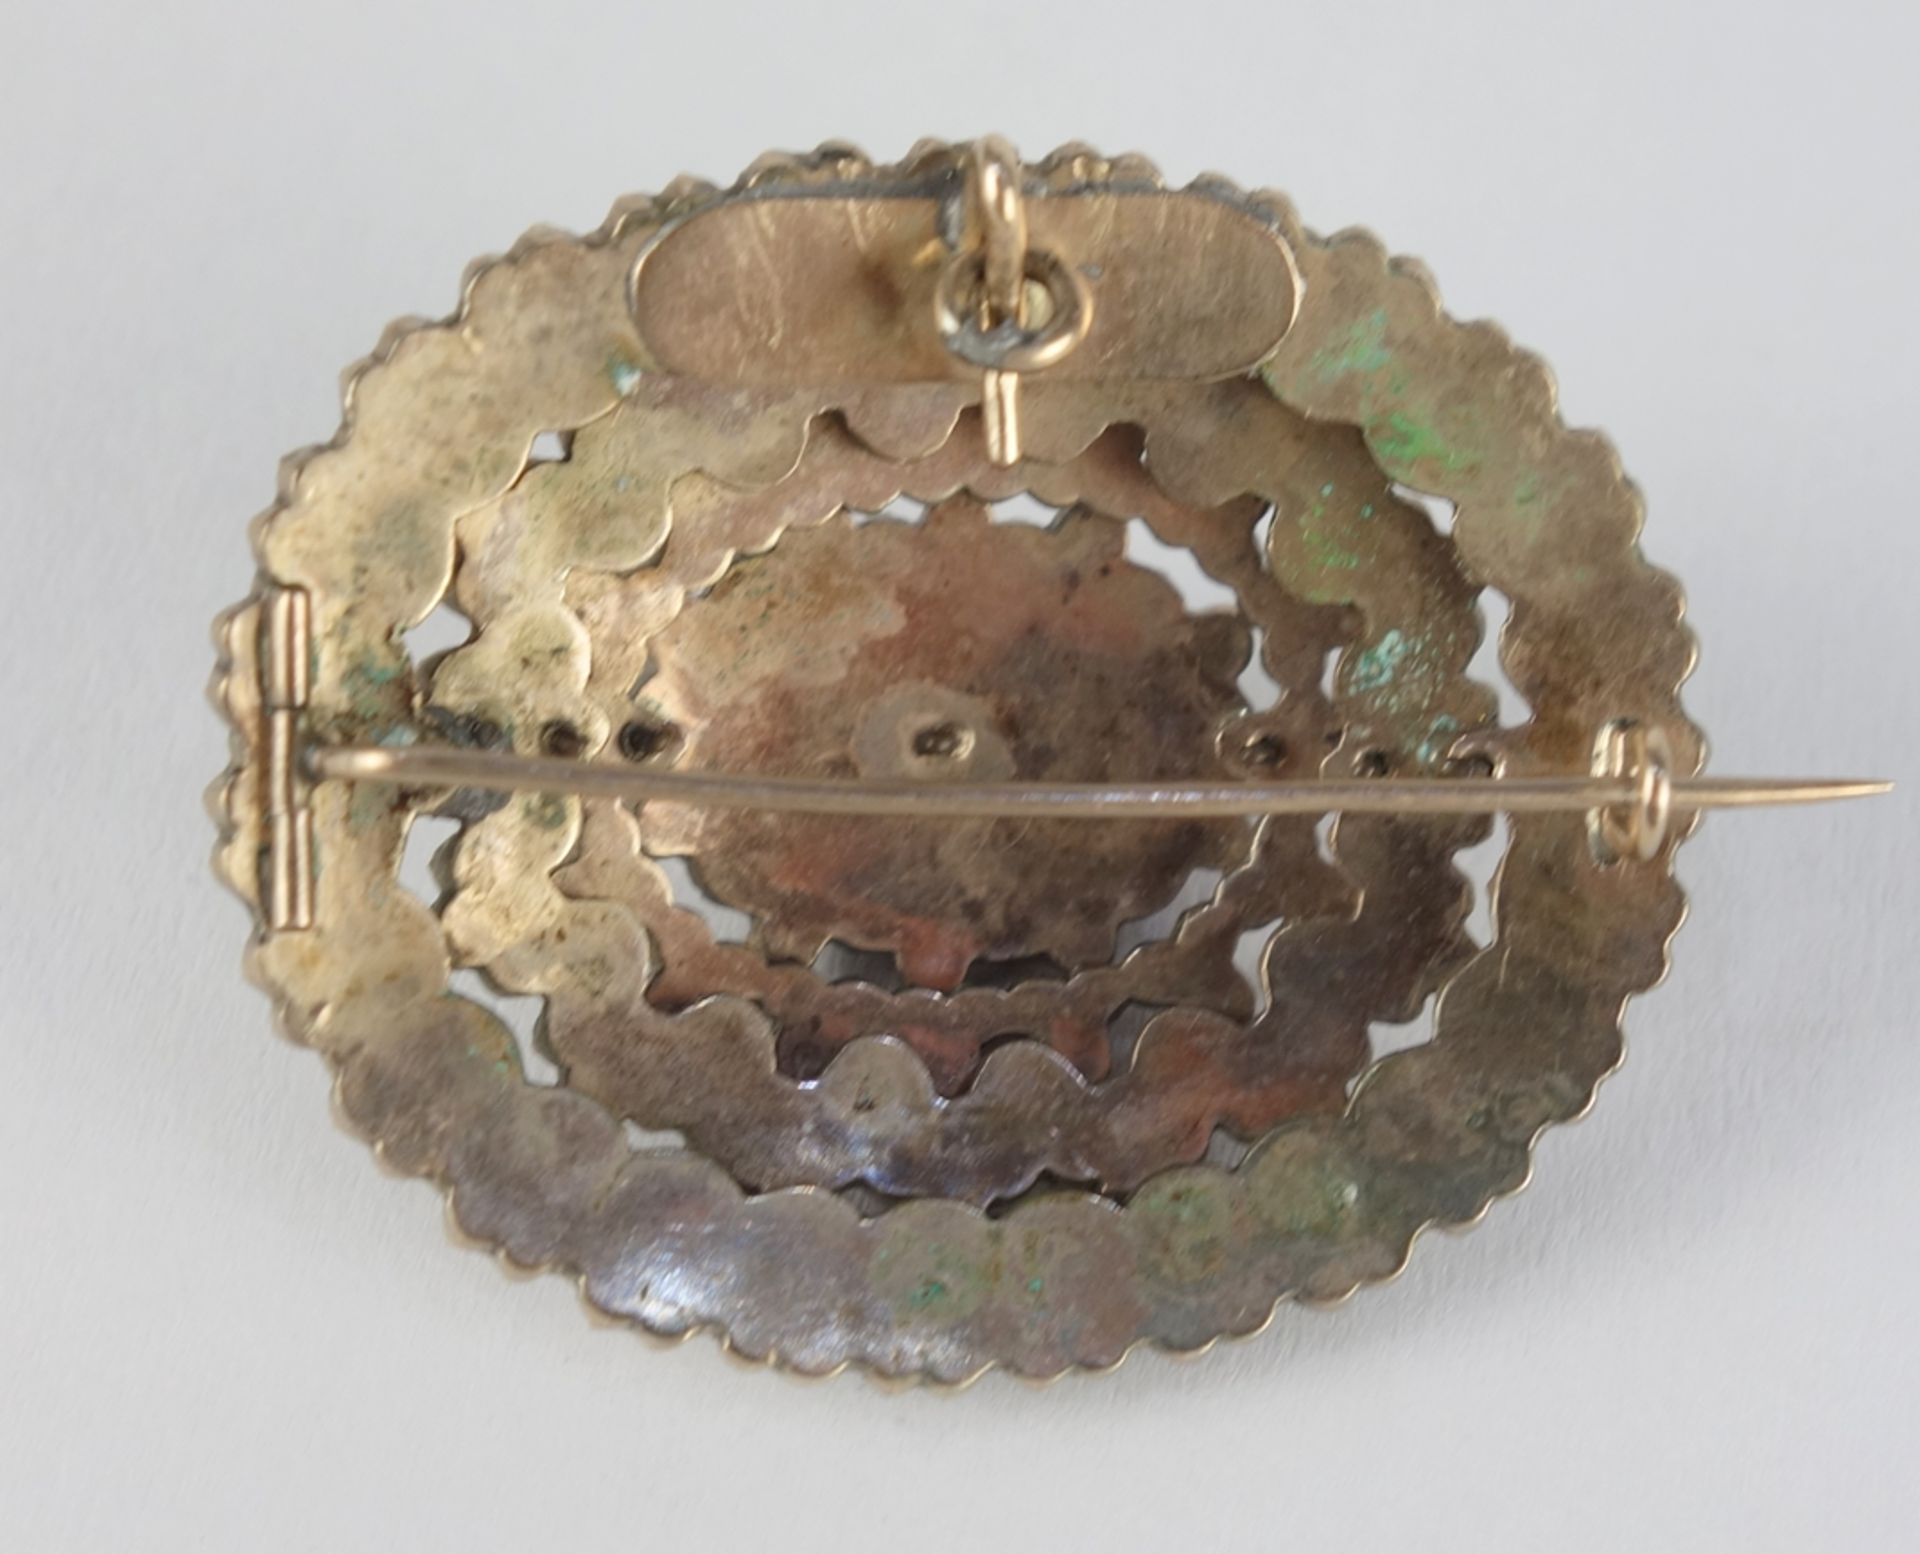 oval garnet brooch / pendant, tombac, Bohemia c. 1890 - Image 2 of 2